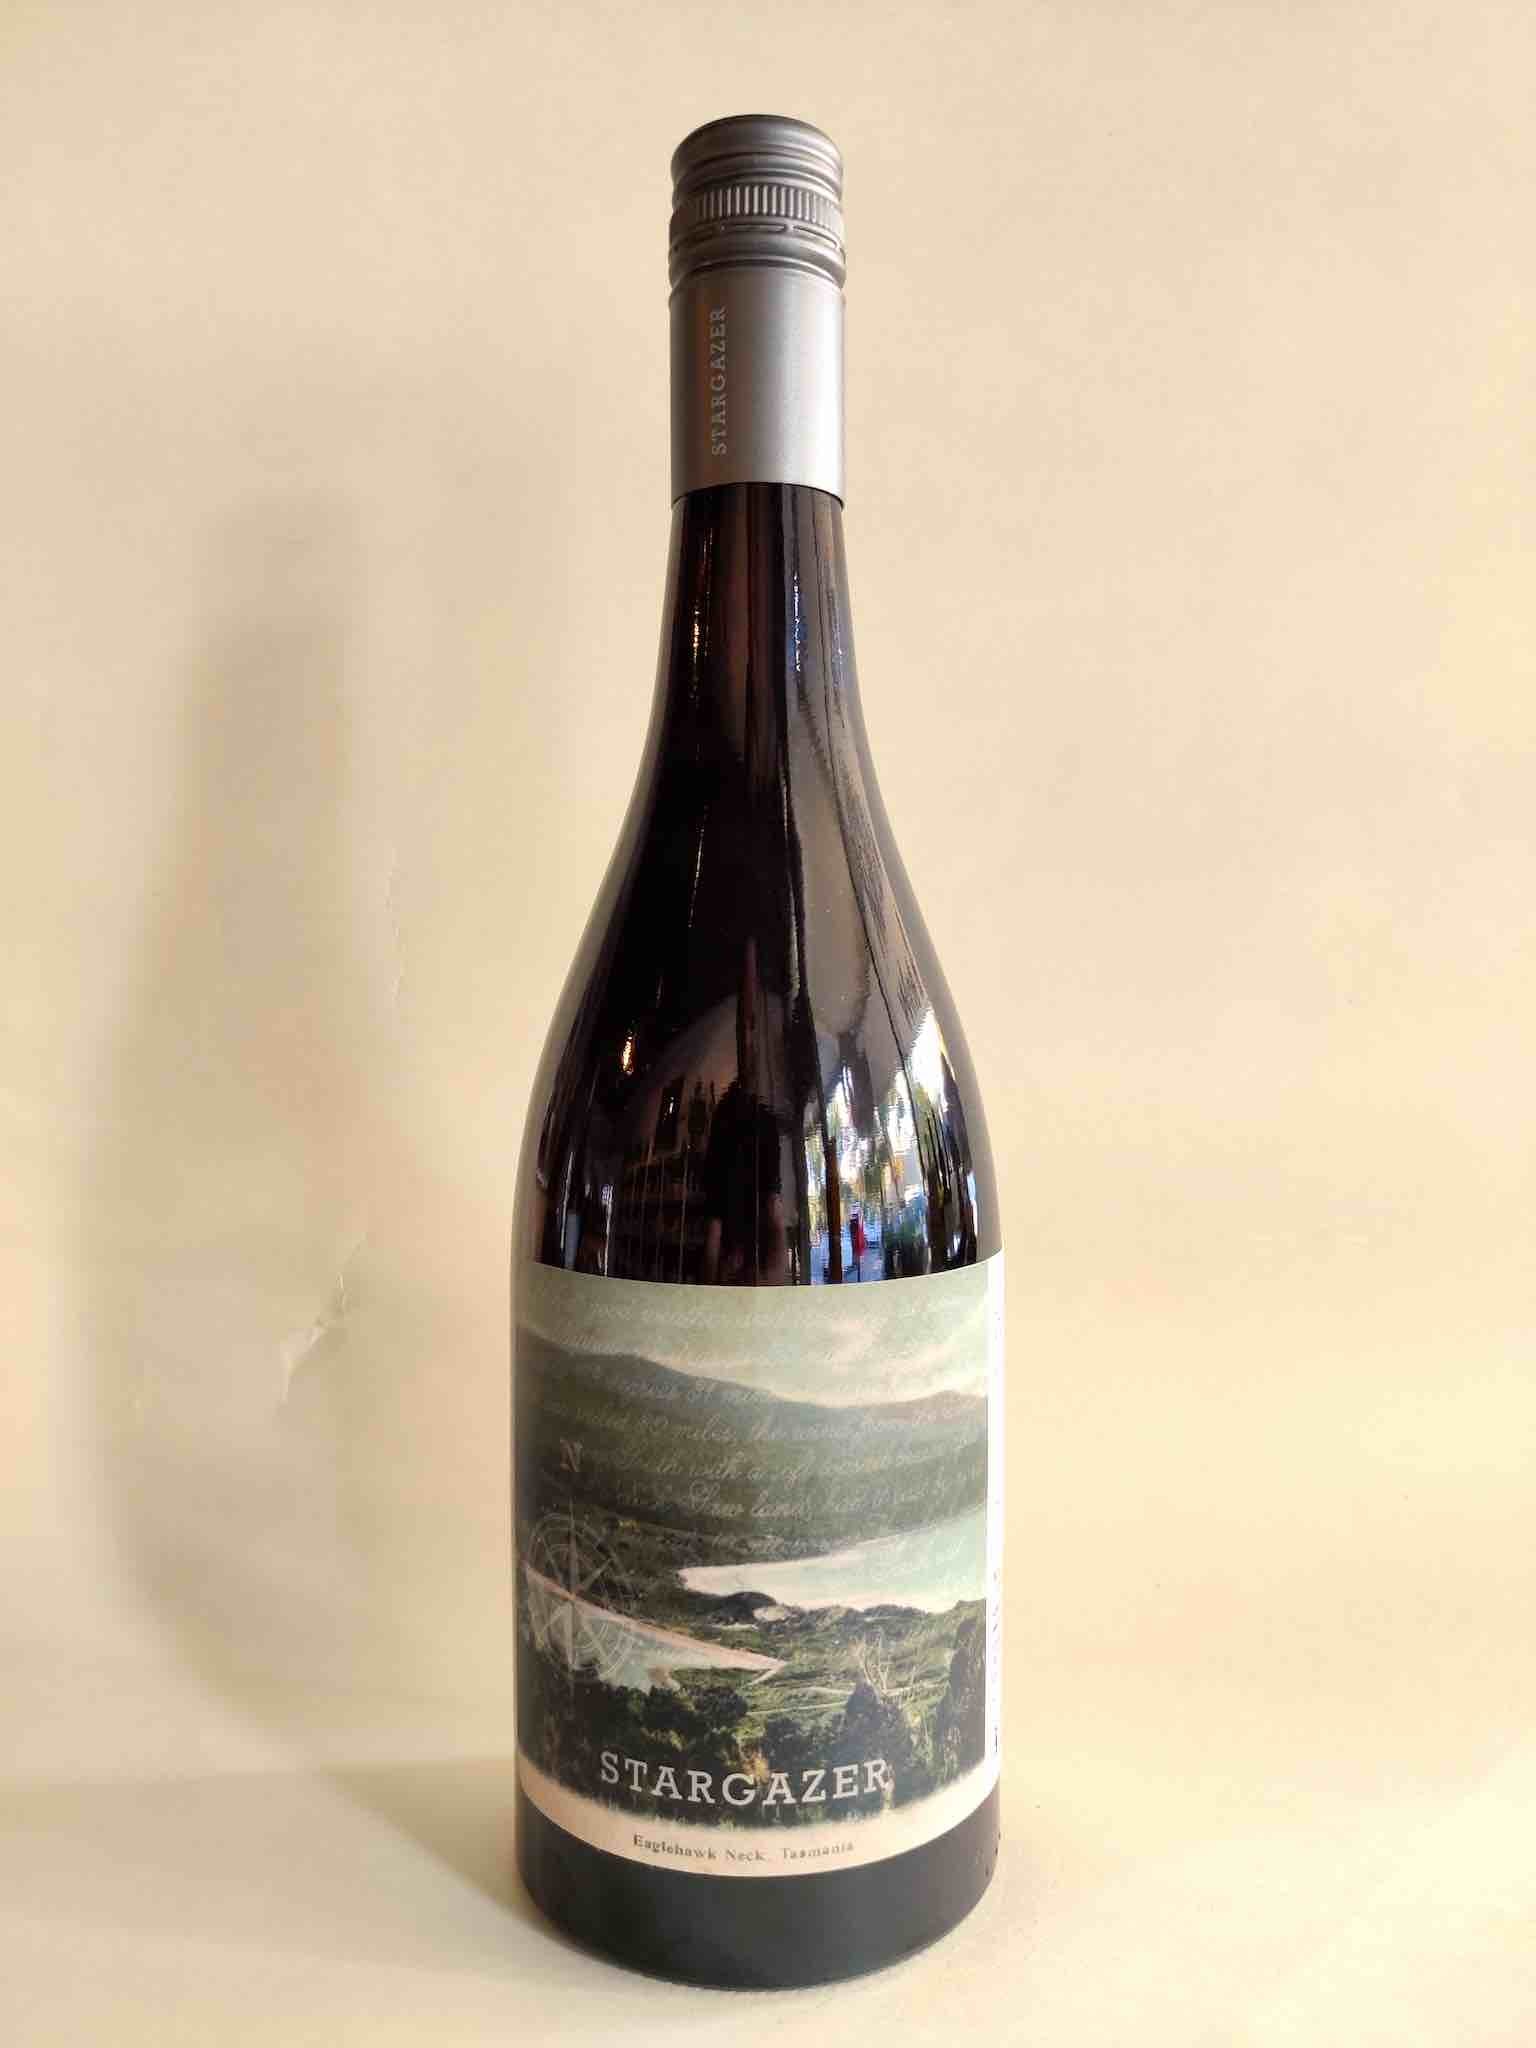 A bottle of 2022 Stargazer Pinot Noir from the Coal River Valley, Tasmania.